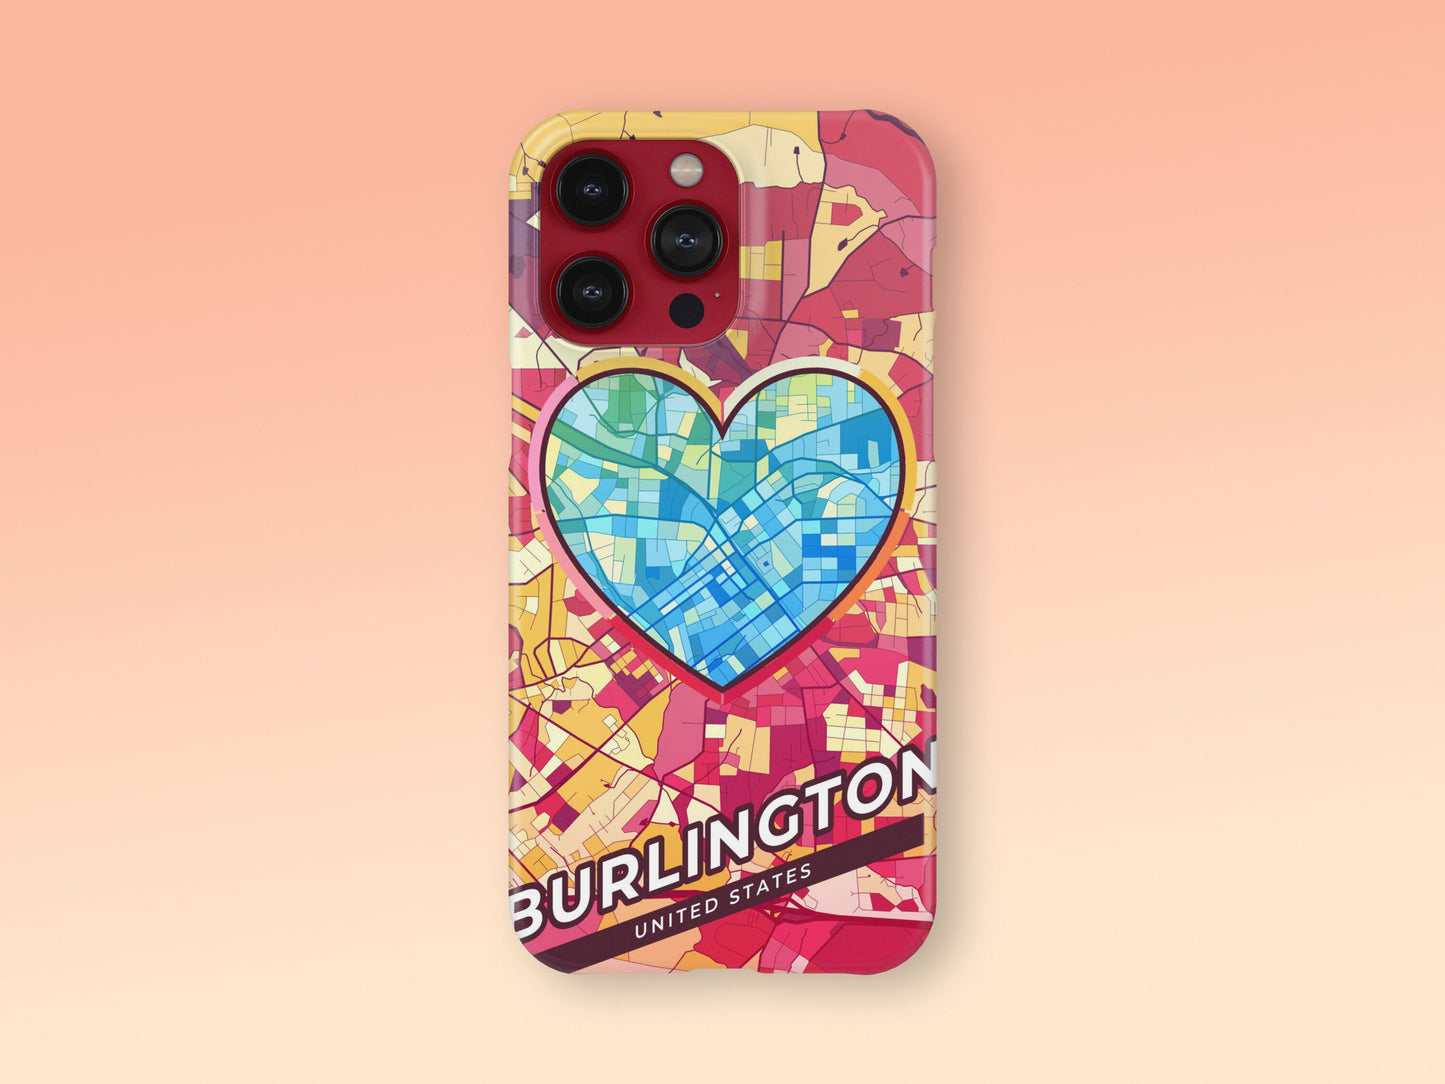 Burlington North Carolina slim phone case with colorful icon. Birthday, wedding or housewarming gift. Couple match cases. 2